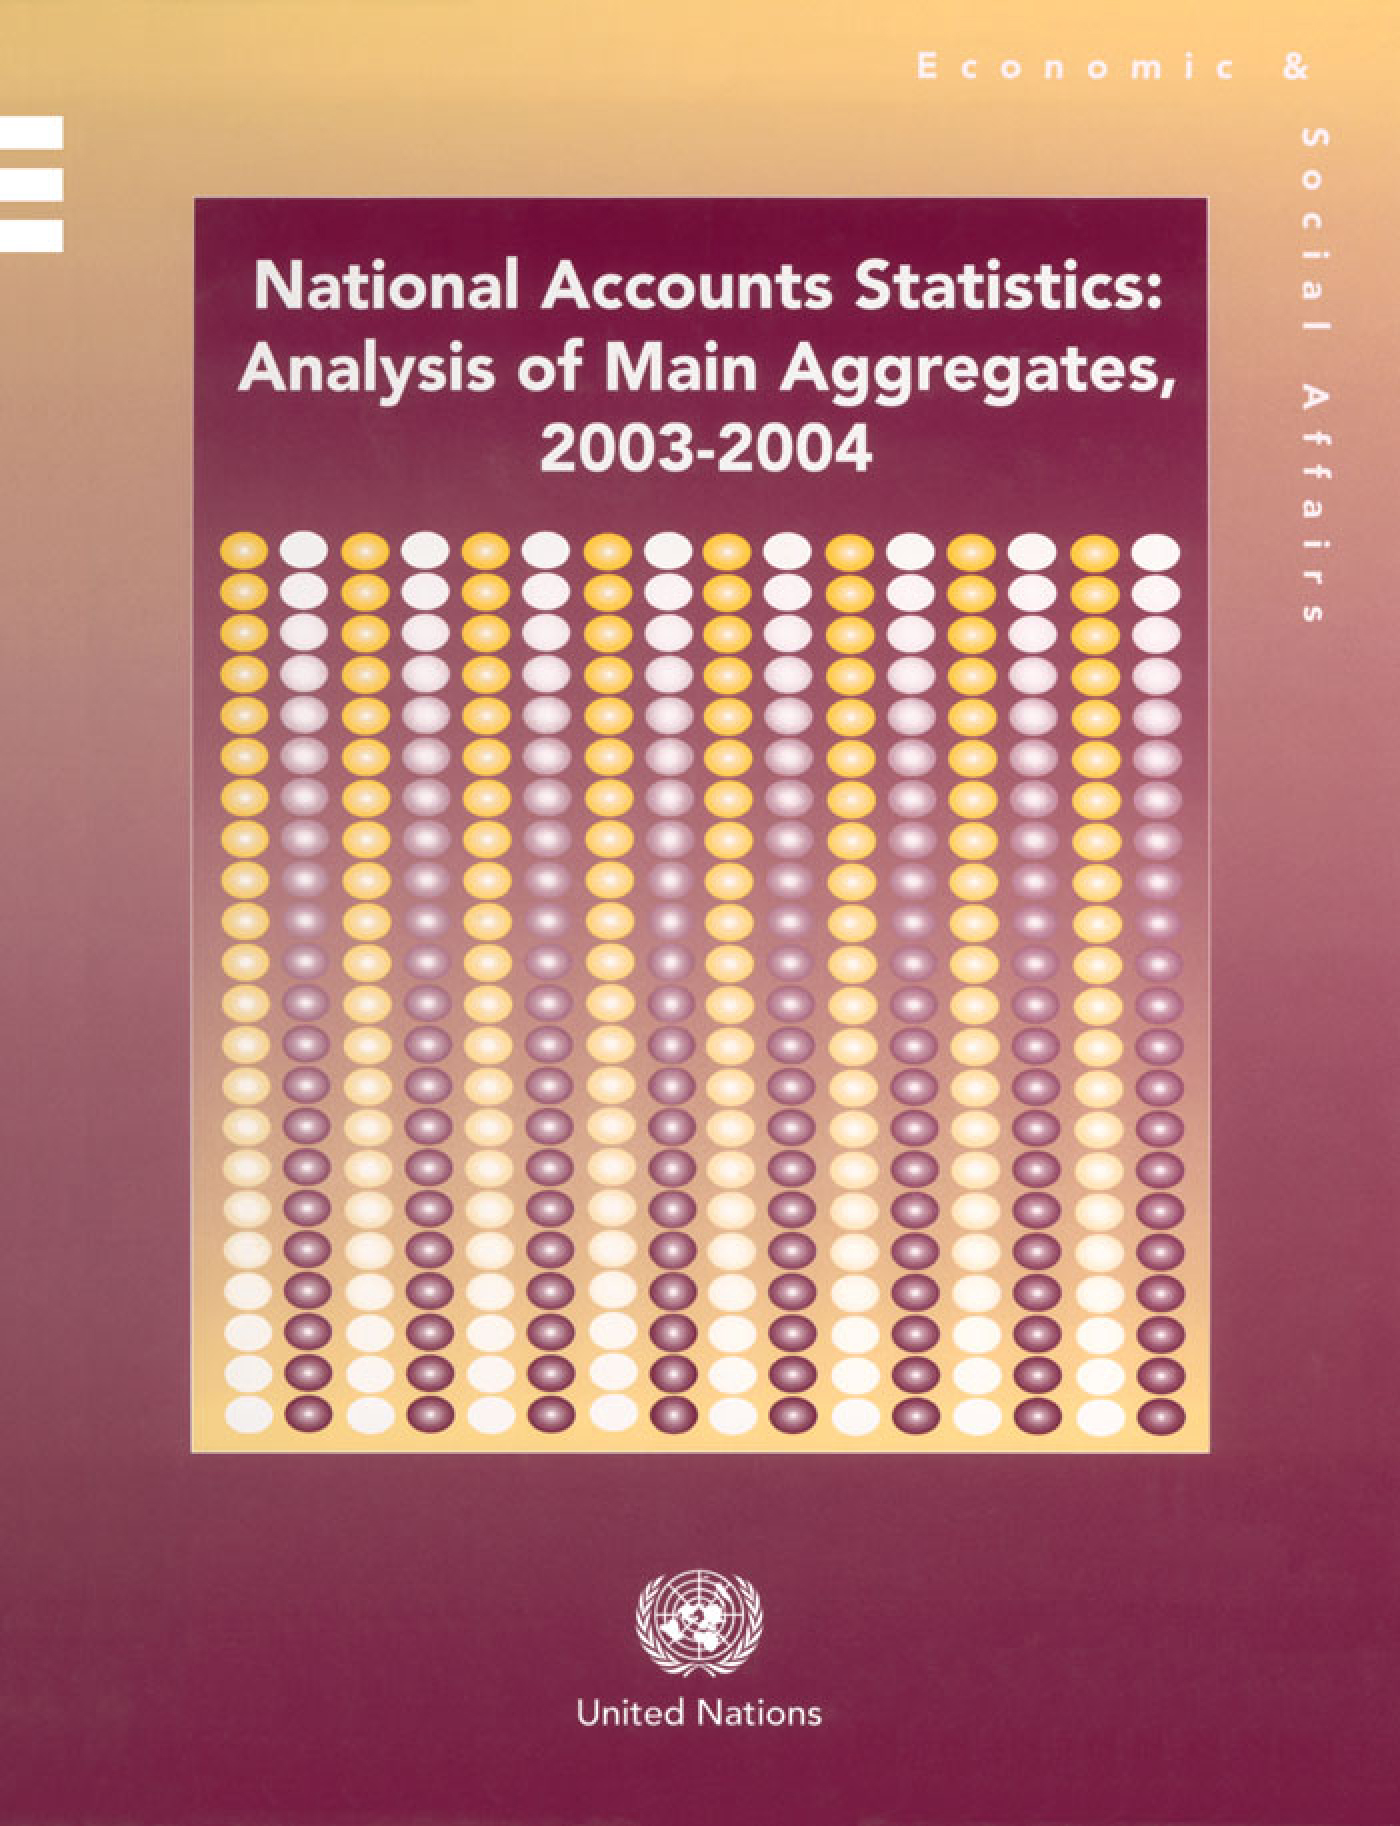 image of National Accounts Statistics: Analysis of Main Aggregates 2003-2004